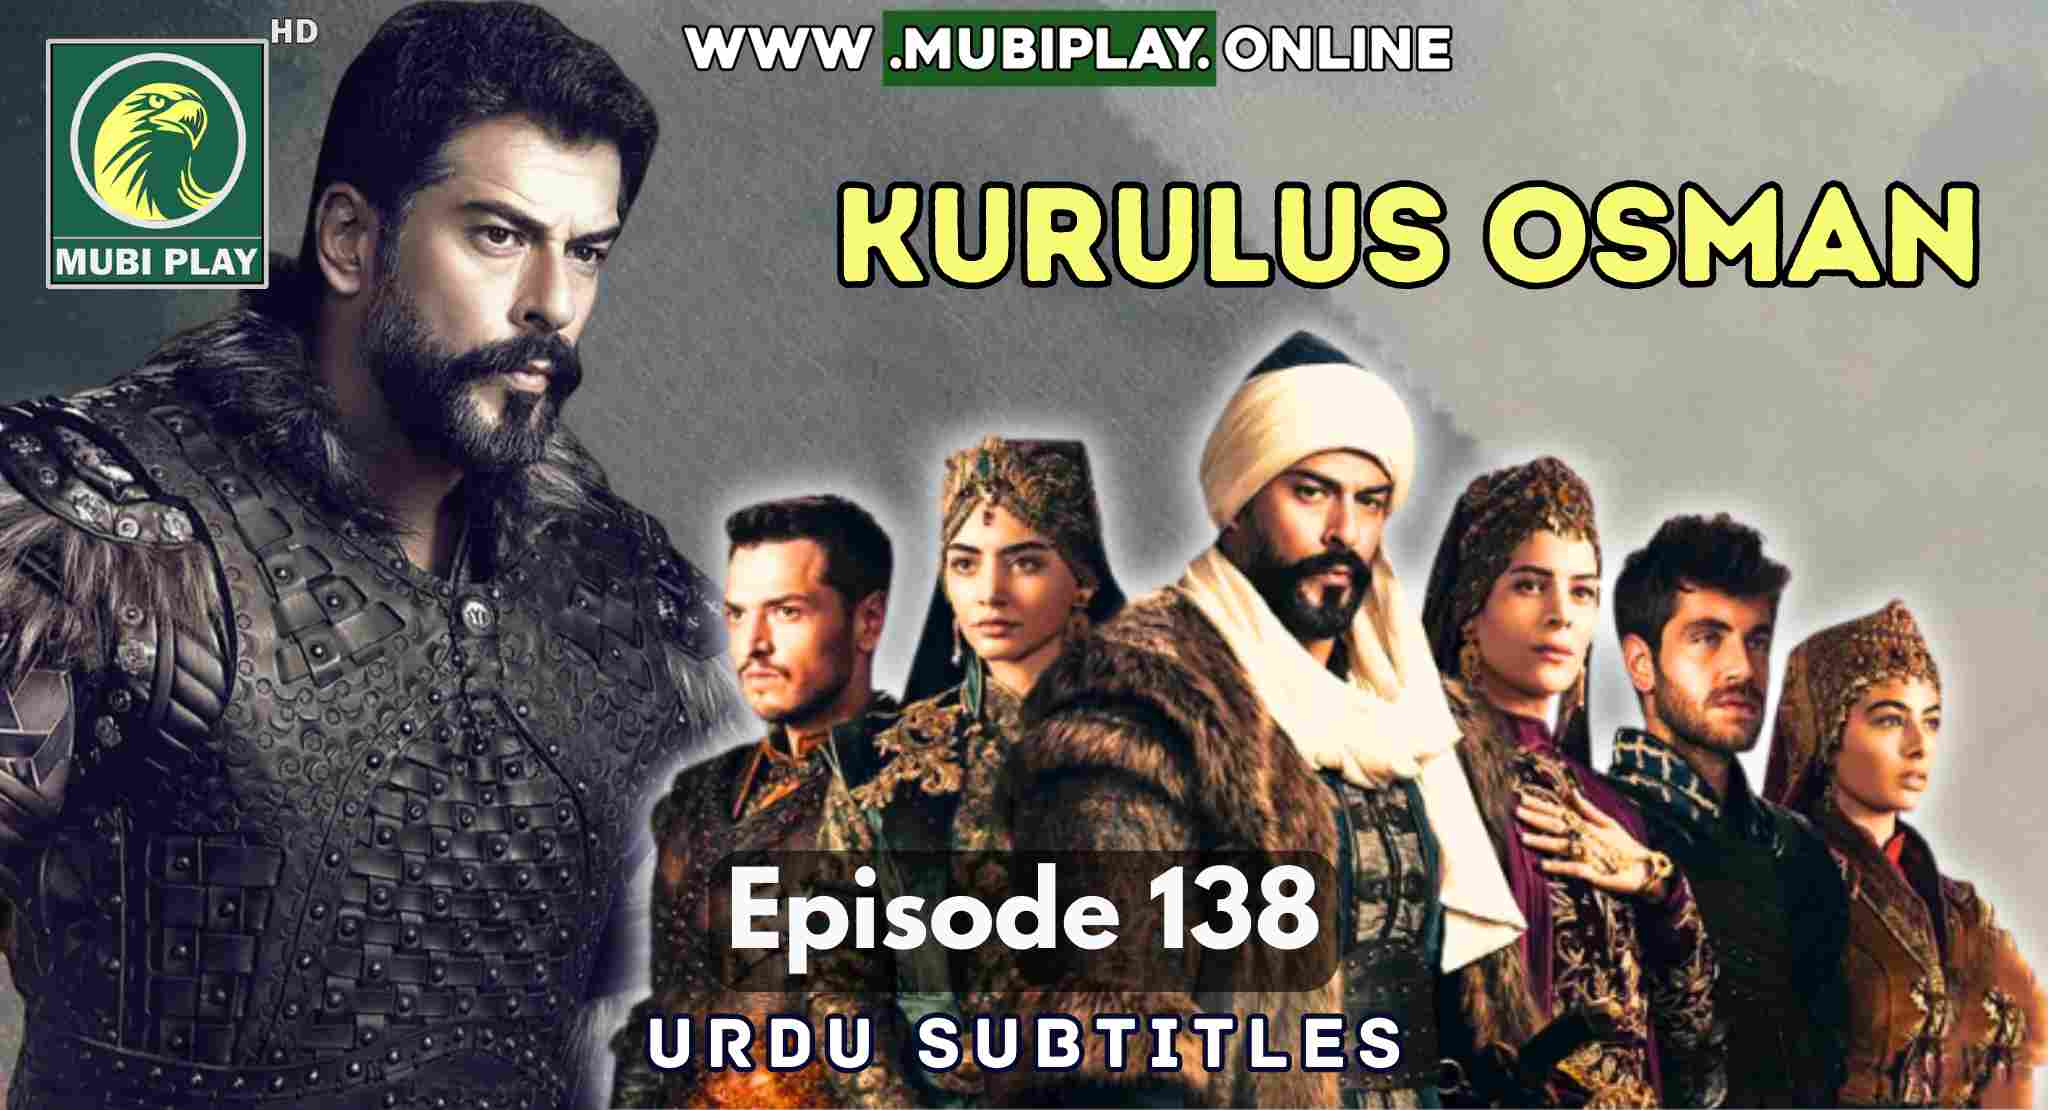 Kurulus Osman Episode 138 with Urdu Subtitles by Mubi Play